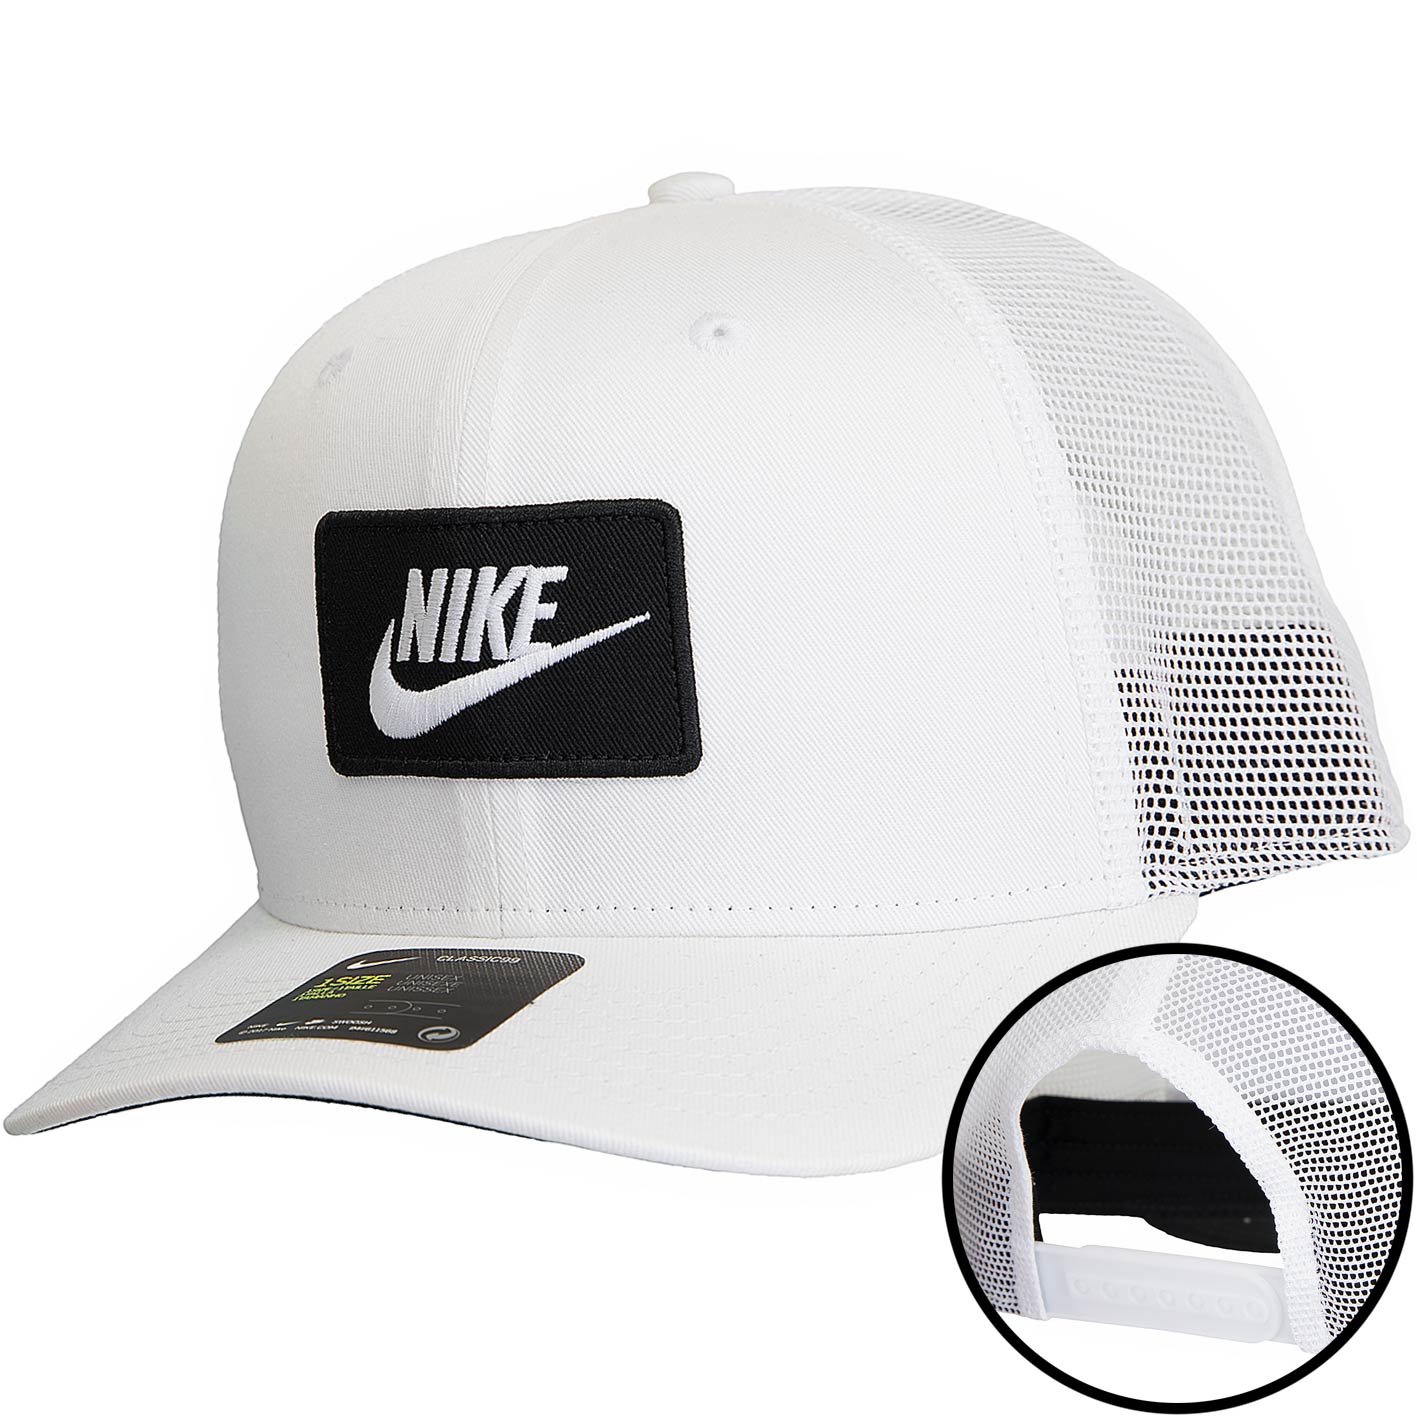 ☆ Nike Trucker Cap Classic99 weiß - hier bestellen!